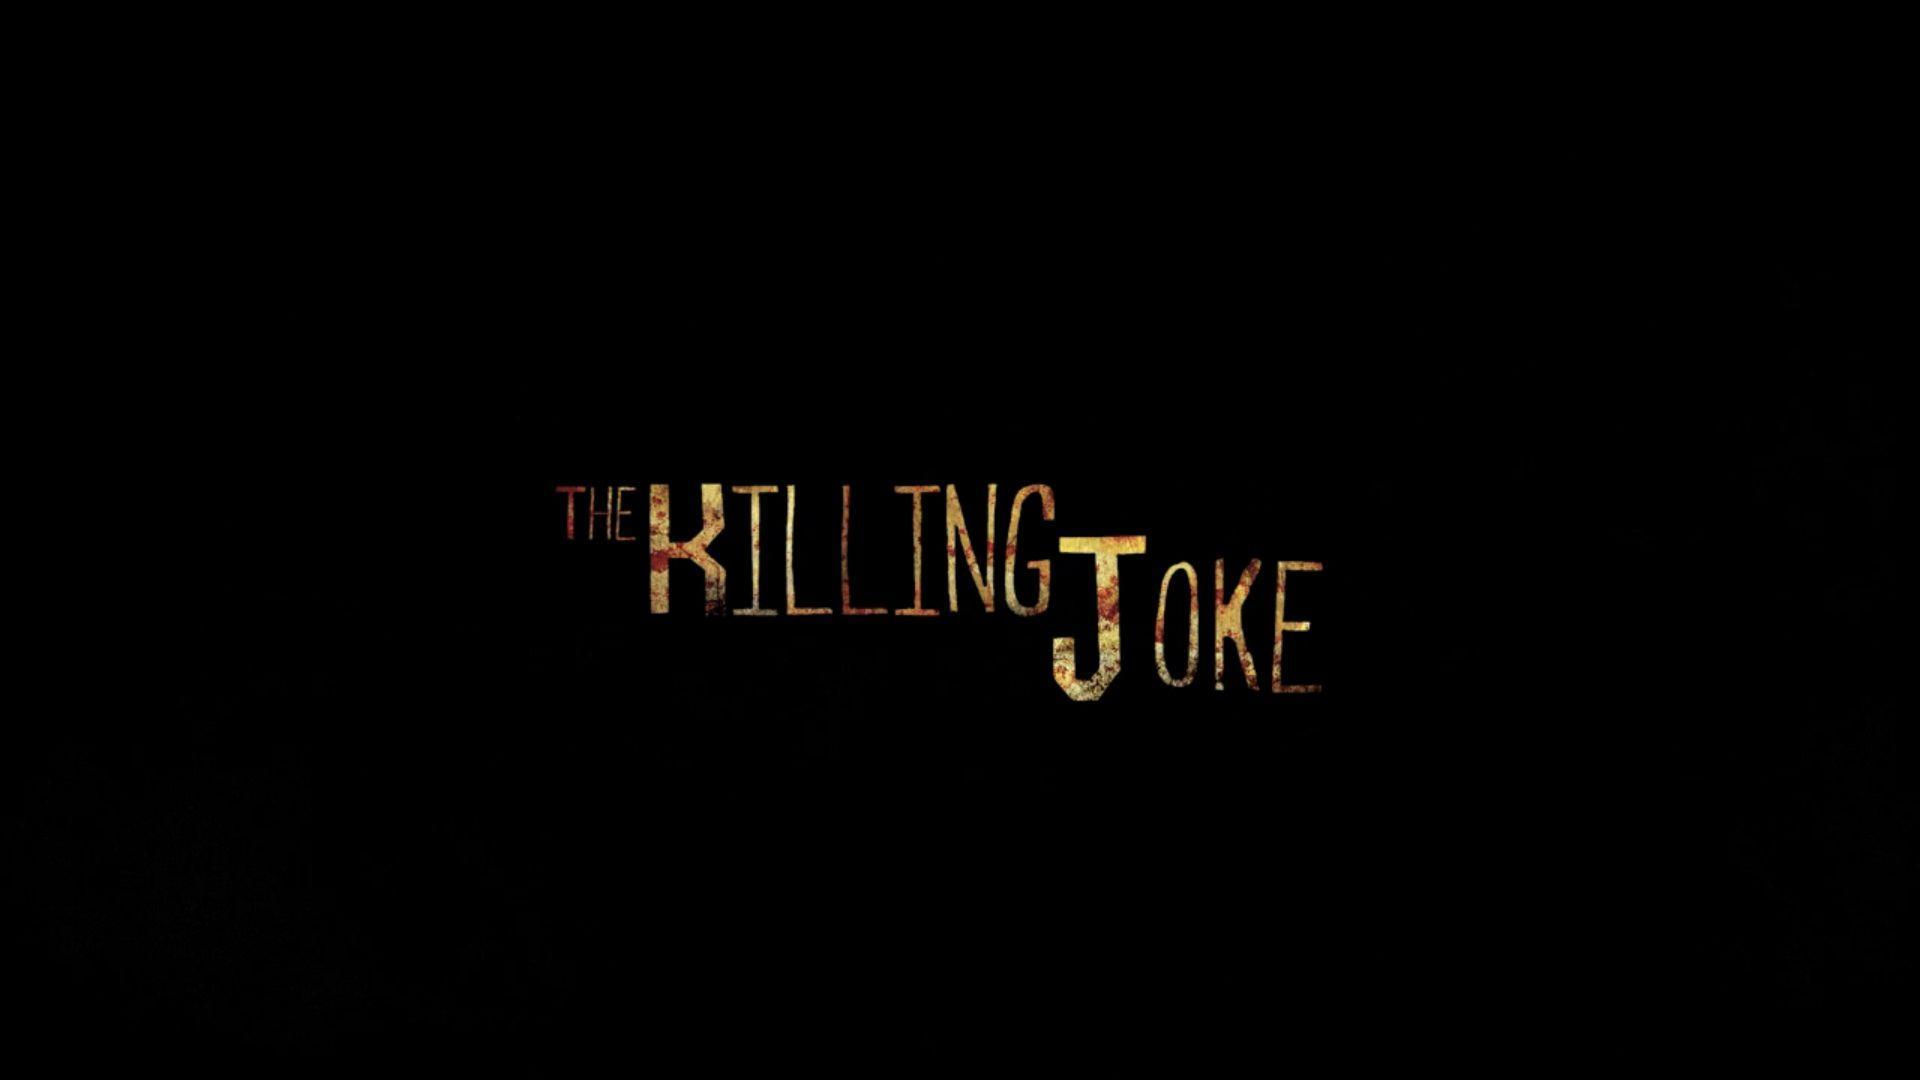 The Killing Joke Wallpaper 1920x1080. Hot HD Wallpaper